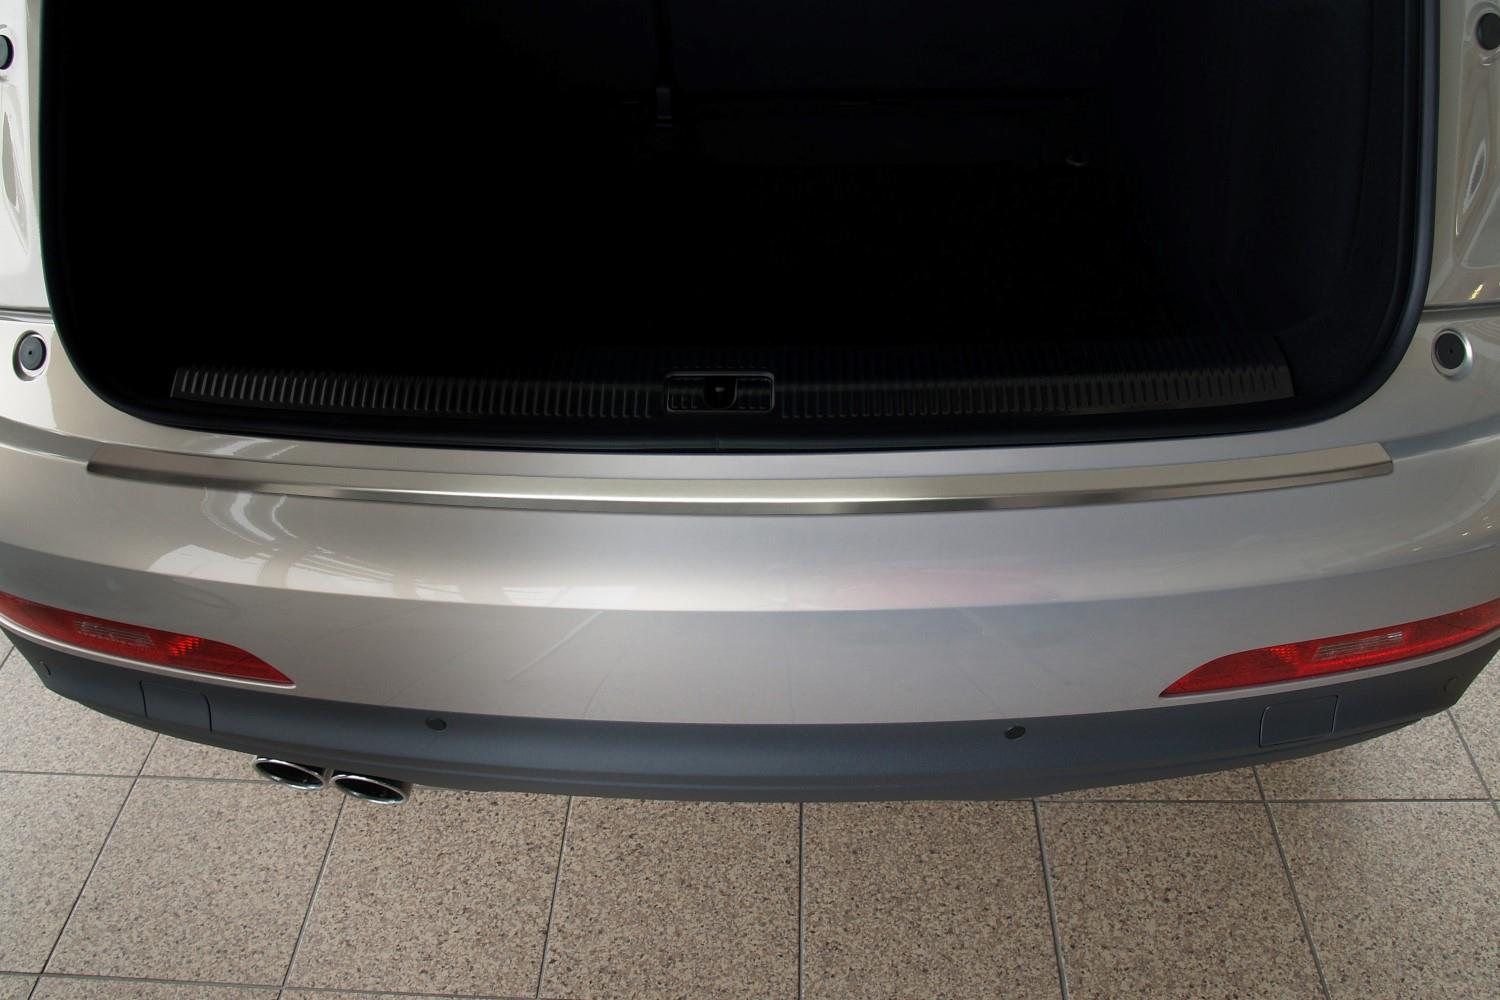 Audi Q3 (8U) 2011-> rear bumper protector stainless steel (AUD2Q3BP) (2)